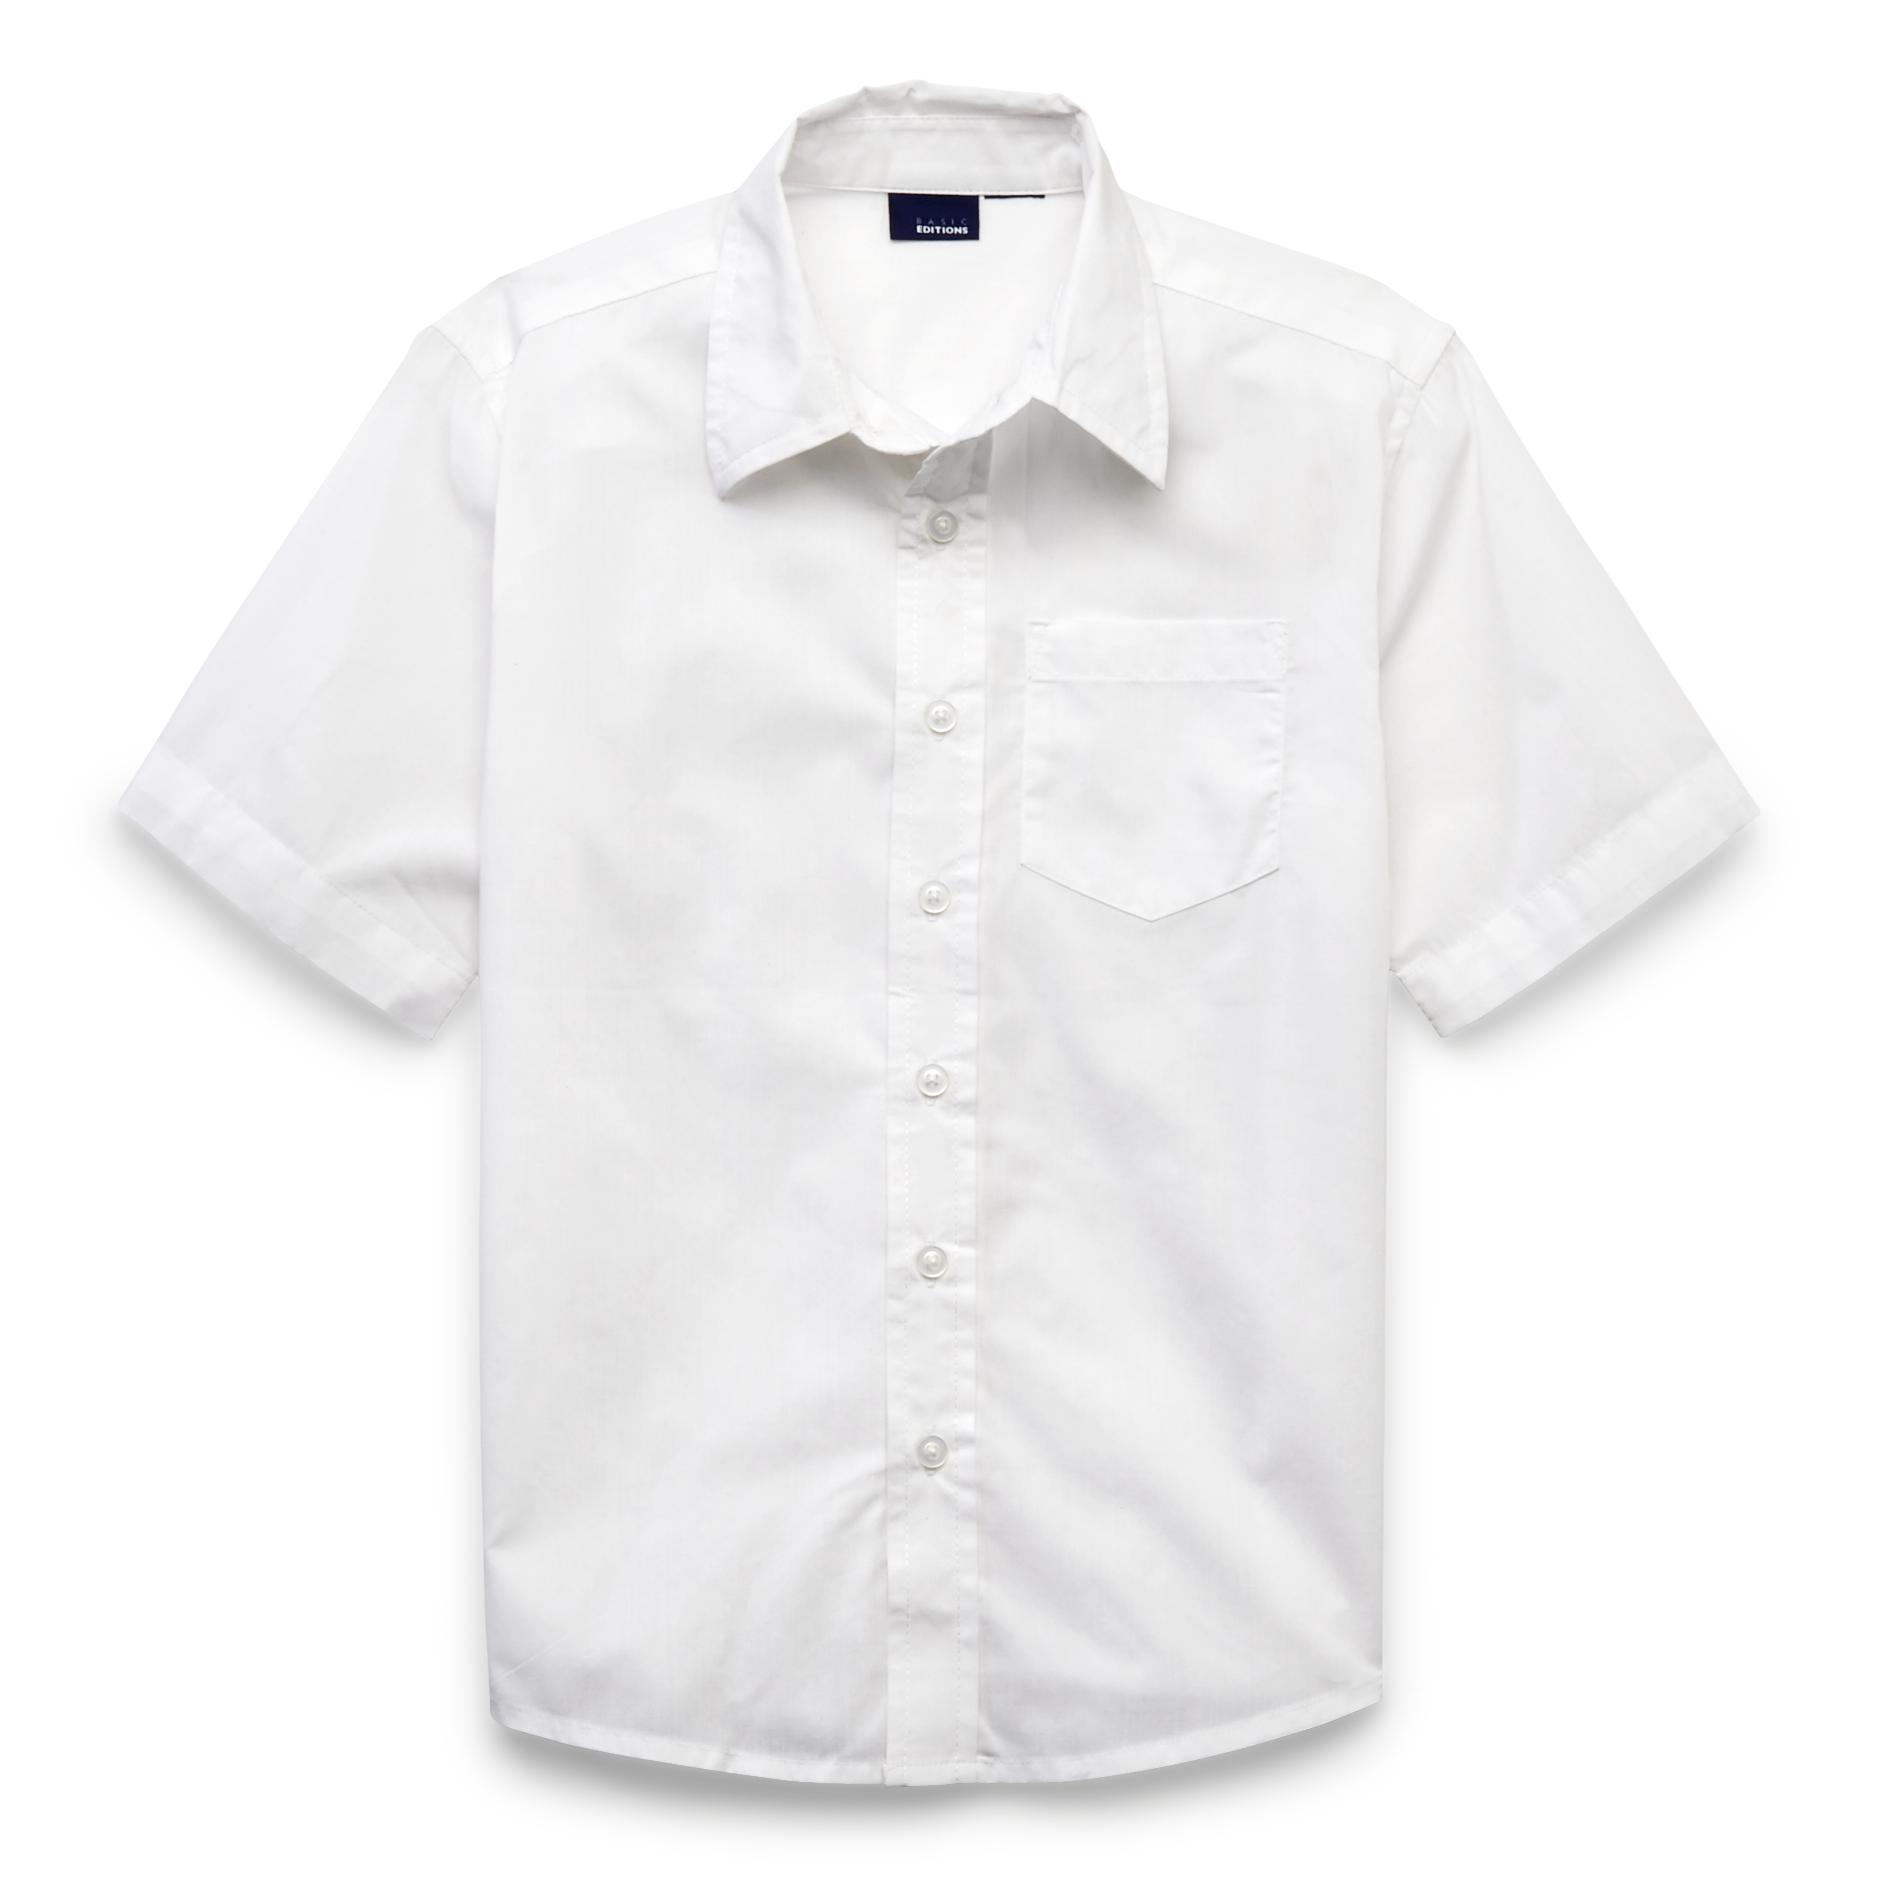 Basic Editions Boy's Short-Sleeve Dress Shirt